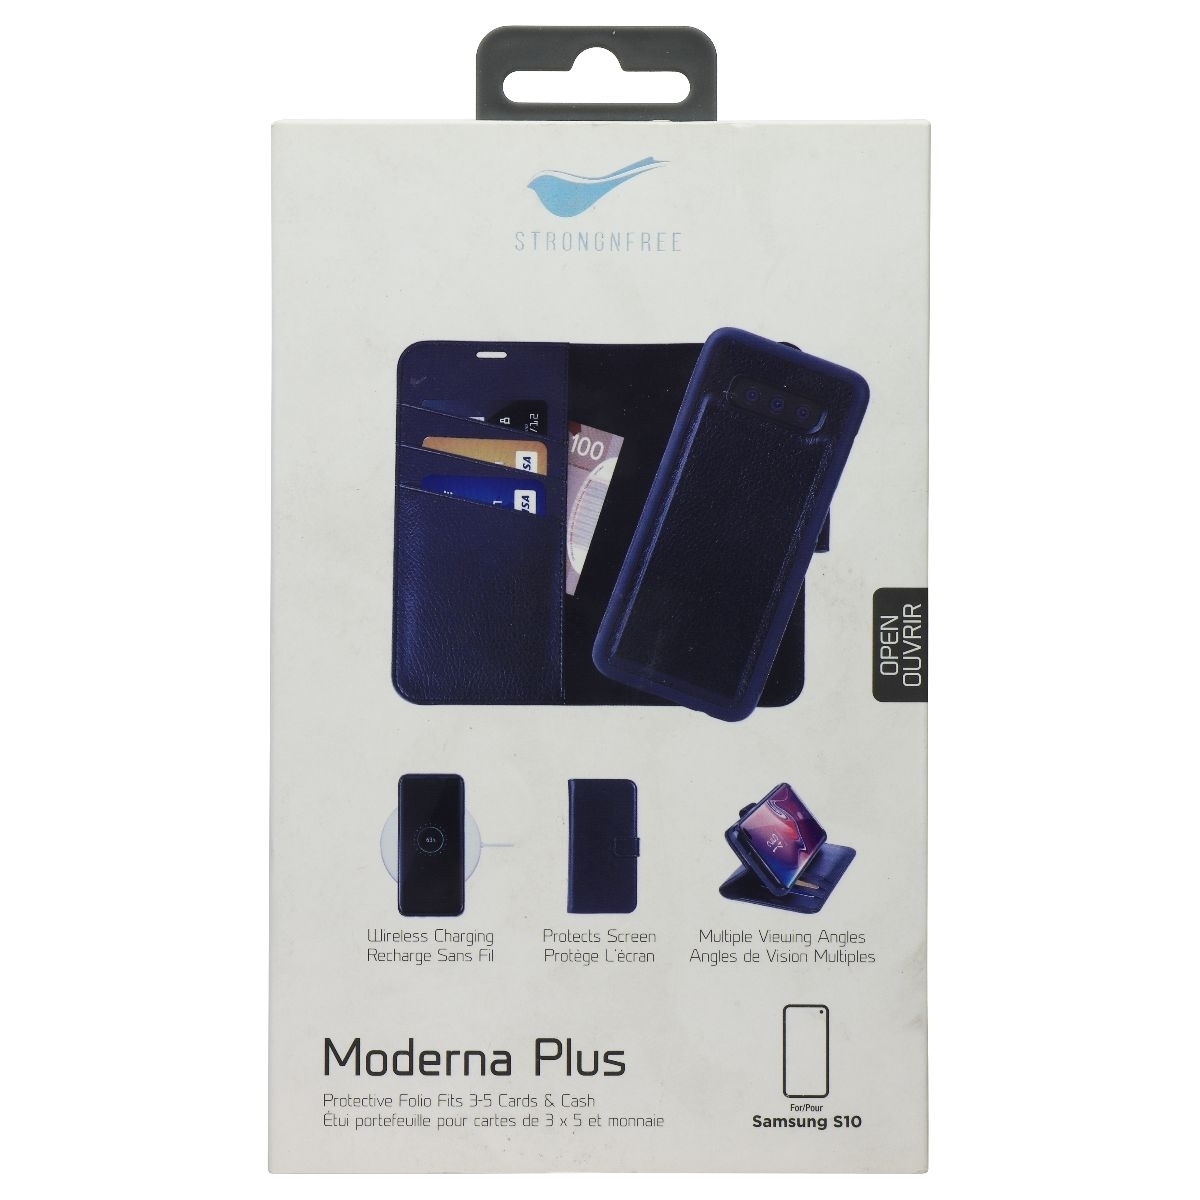 StrongNFree Moderna Plus Series 2-in-1 Wallet Case For Galaxy S10 - Black (Refurbished)